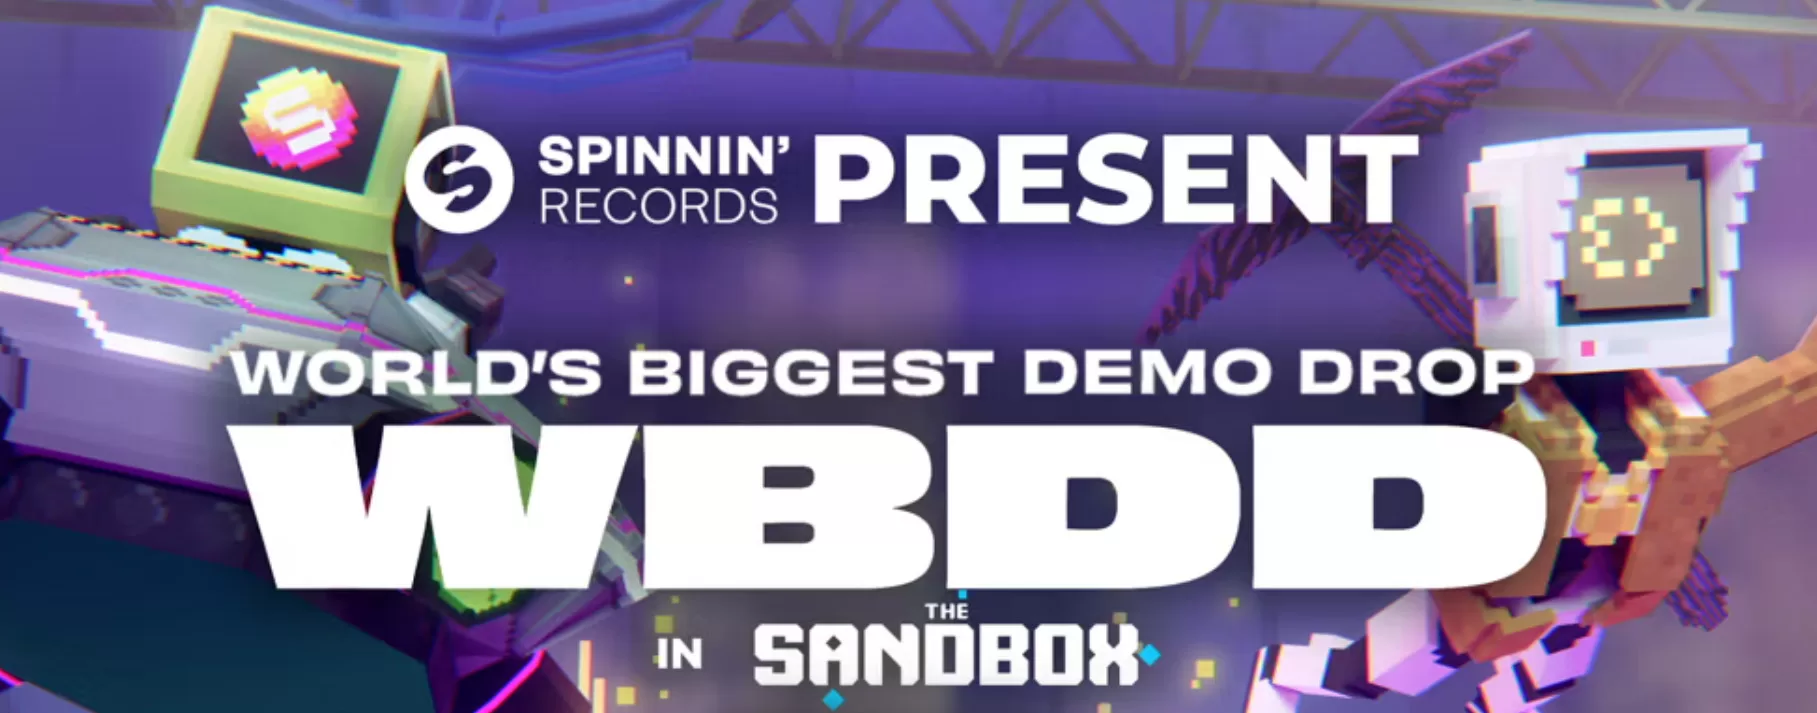 Sandbox ra mắt WBDD